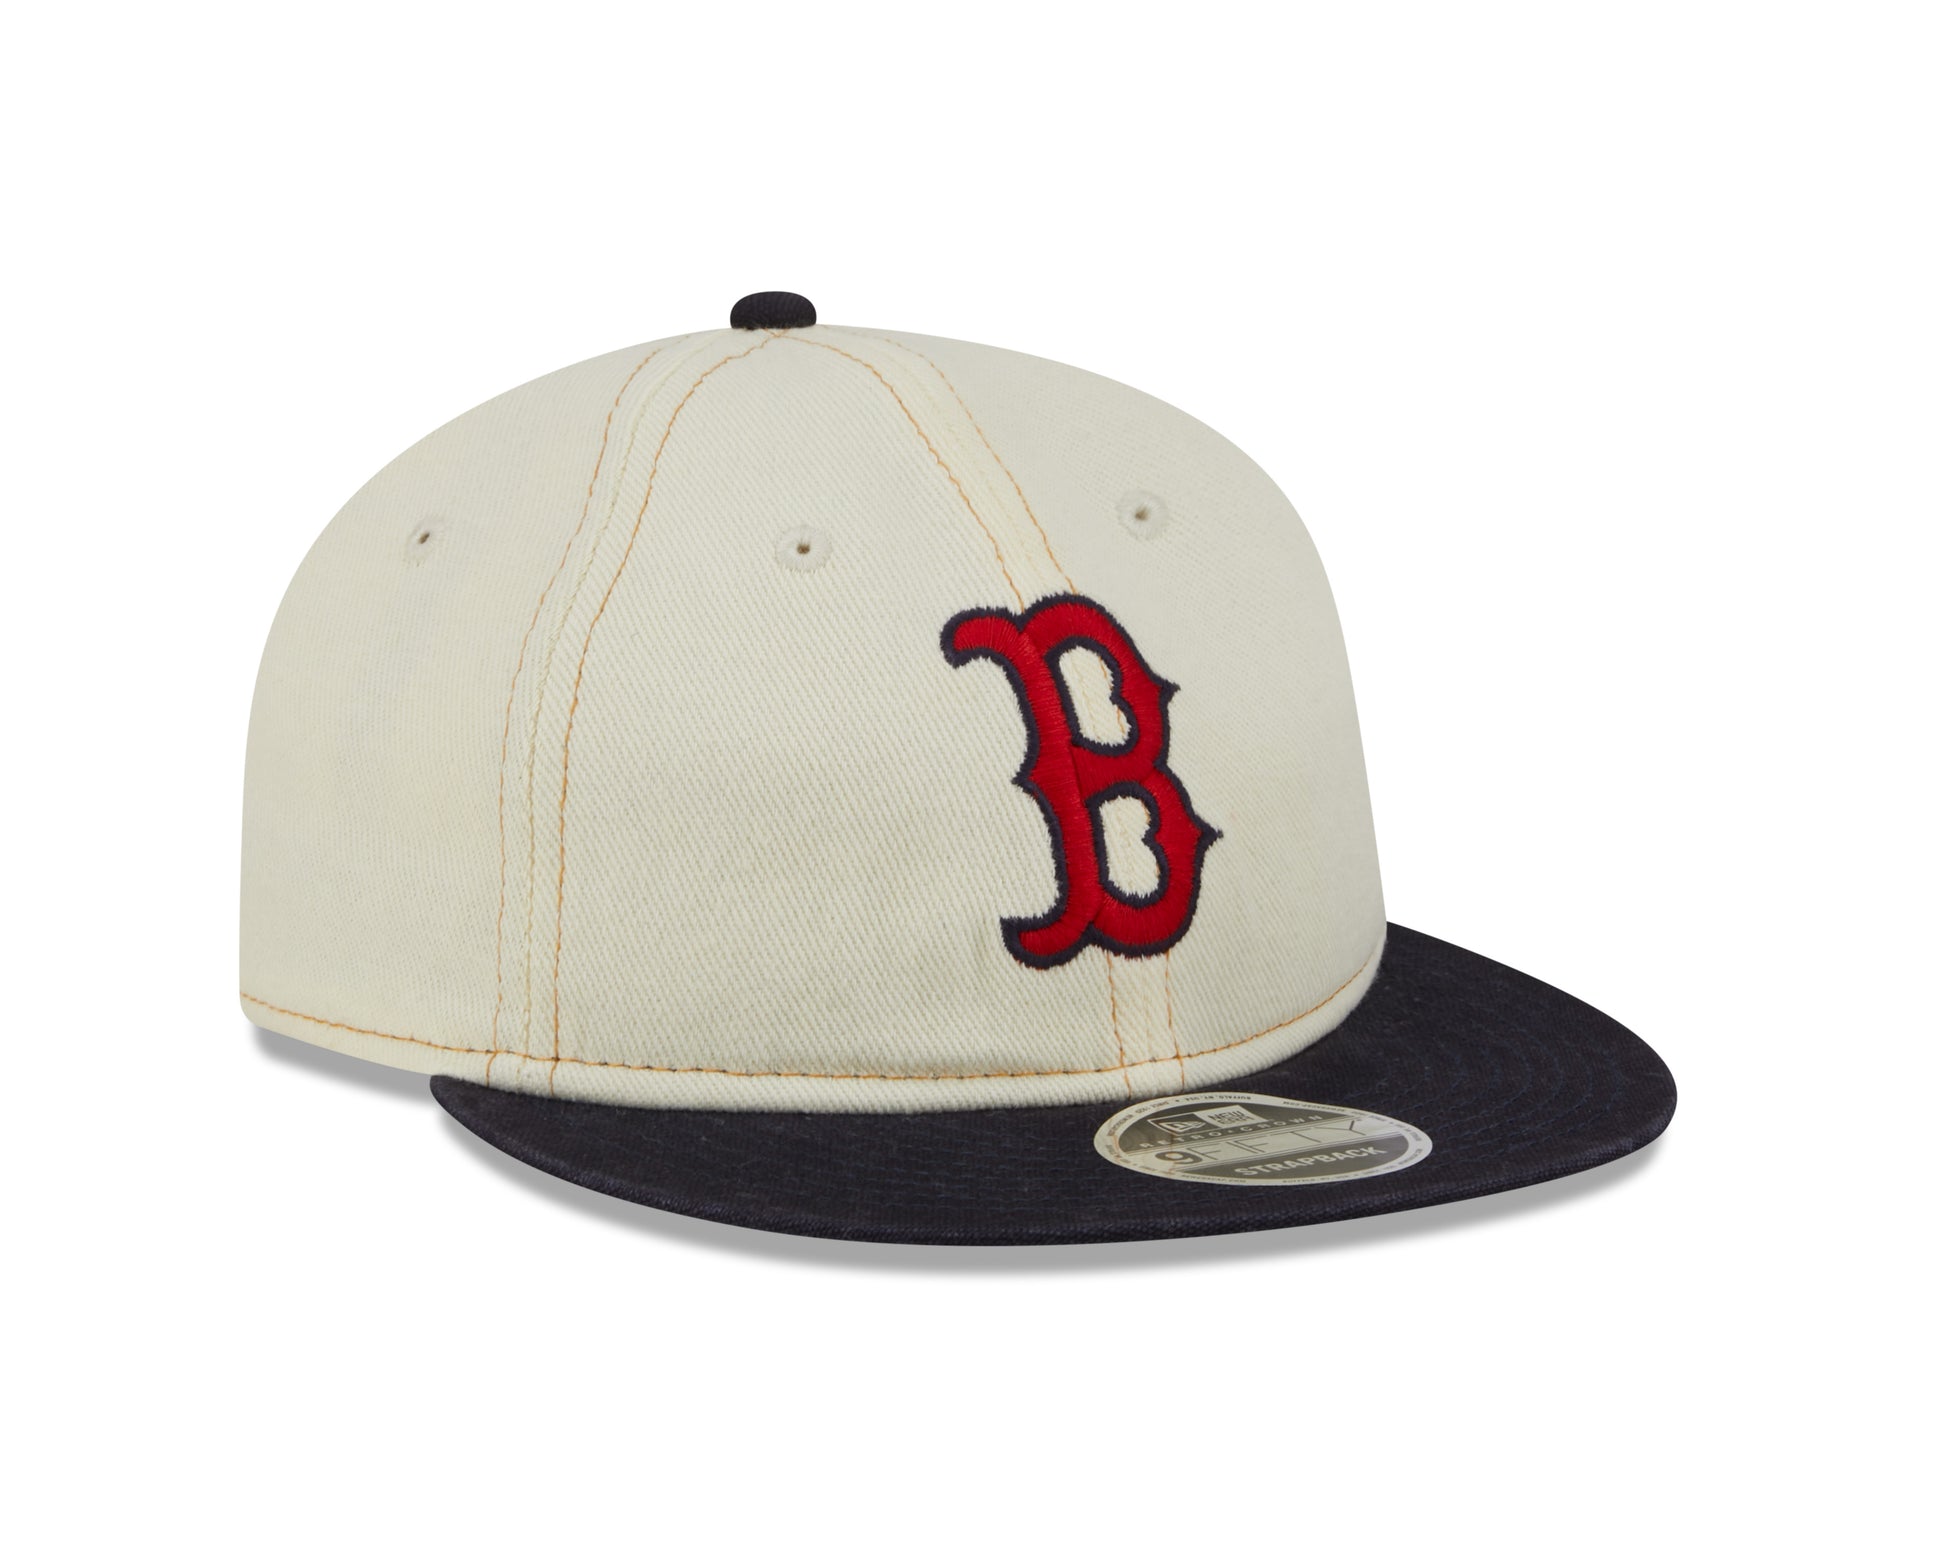 New Era - 9Fifty Retro Crown - Chrome Denim - Boston Red Sox - Chrome White - Headz Up 